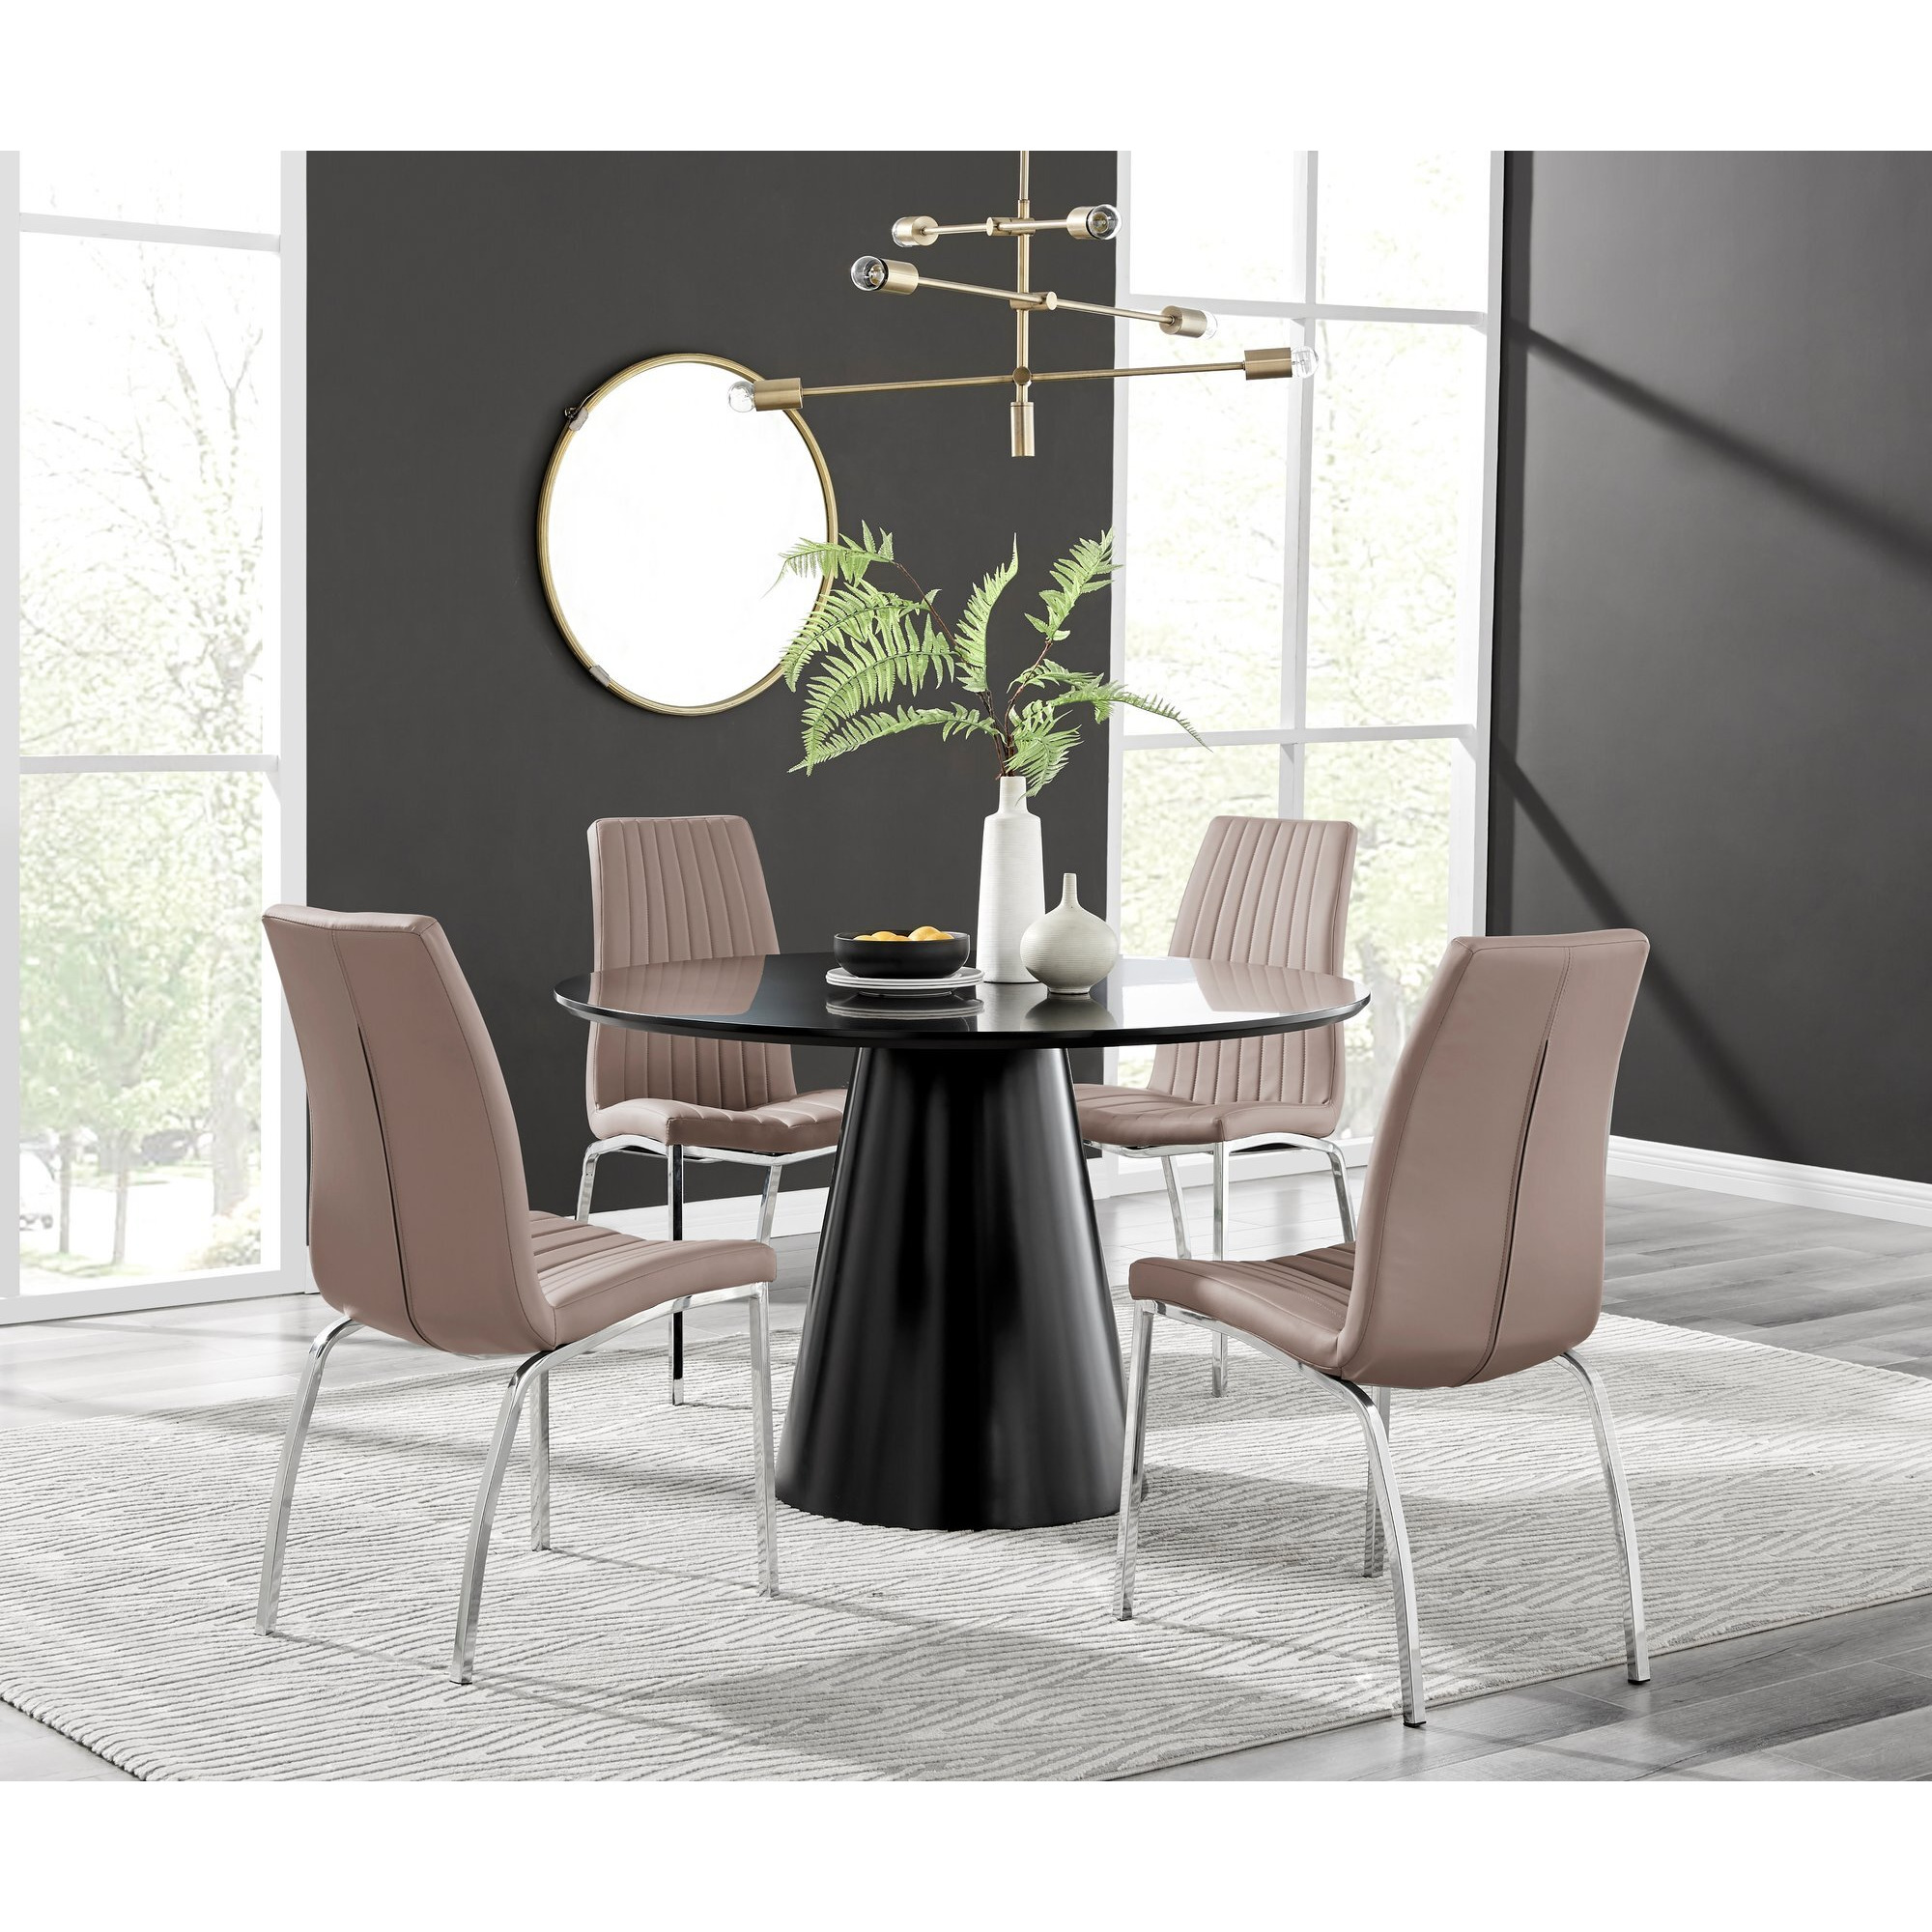 Palma Black Semi Gloss Round Dining Table & 4 Isco Chairs